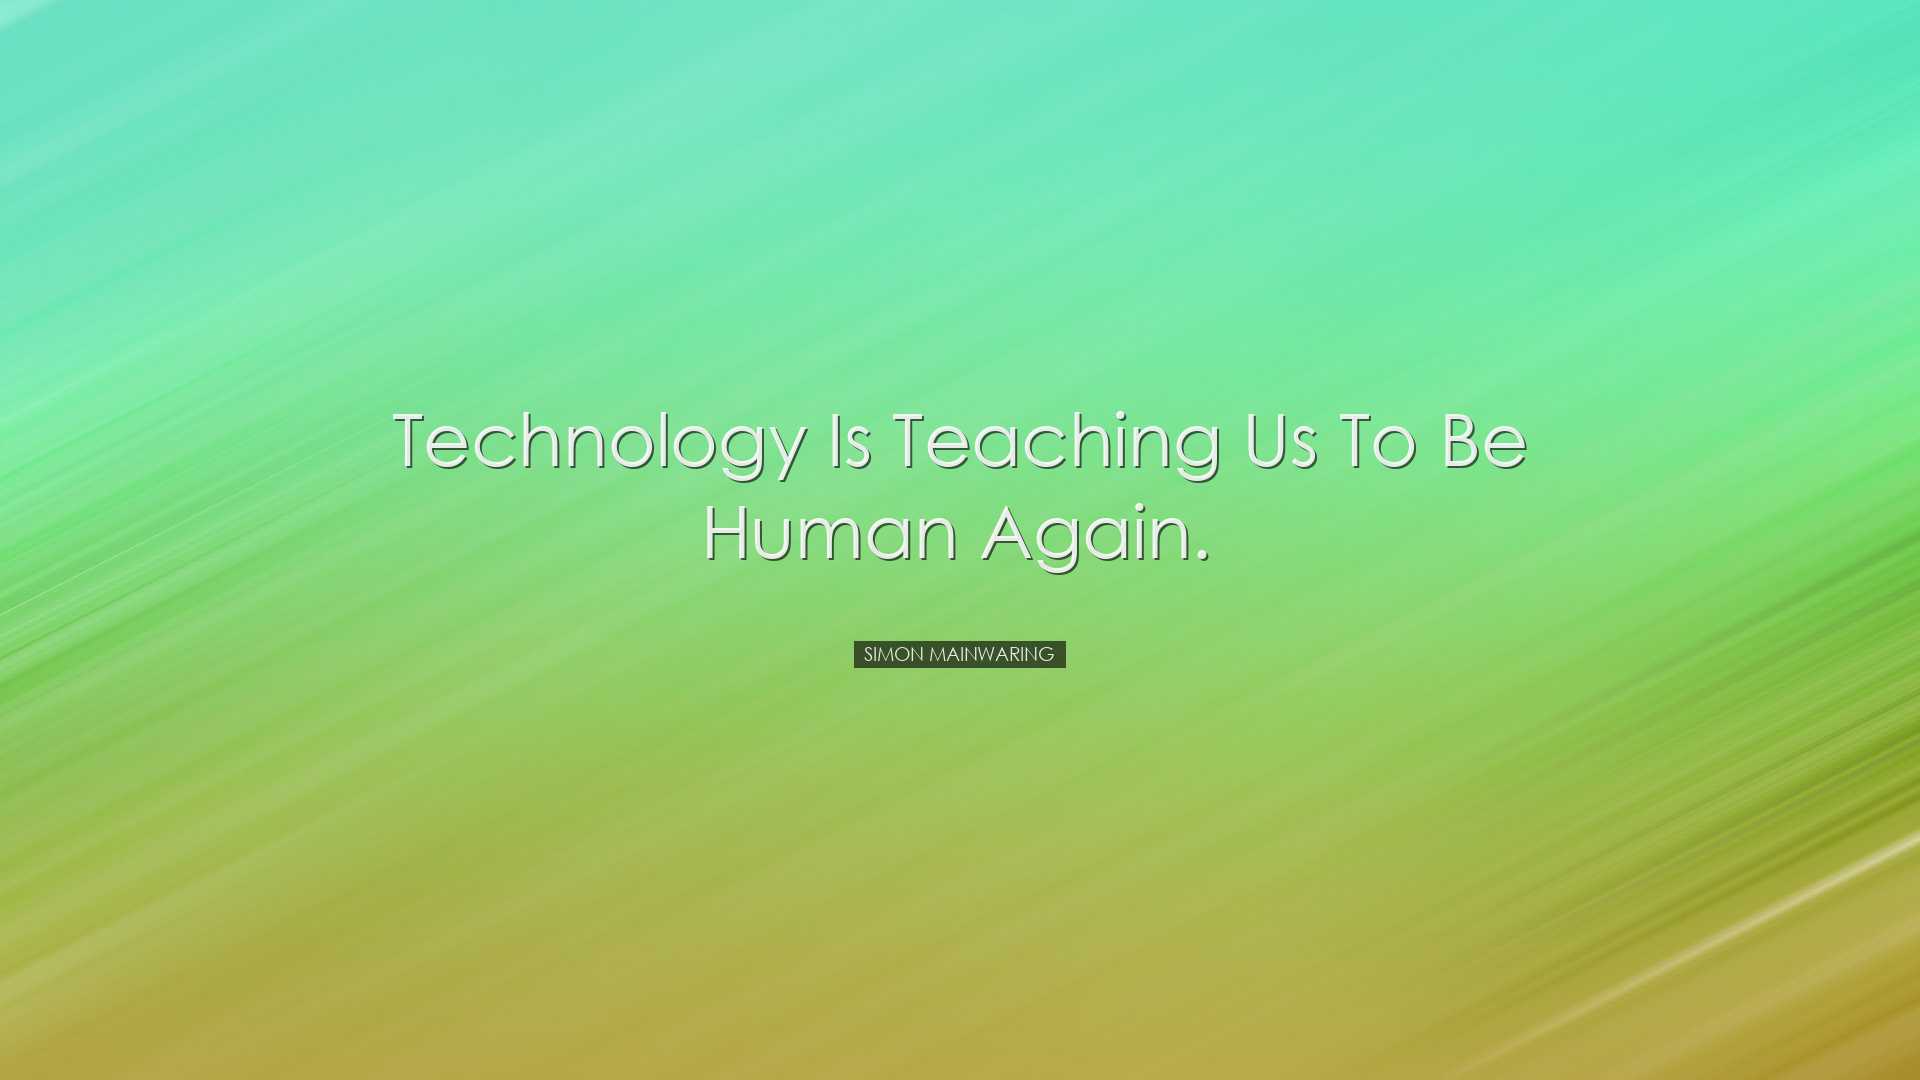 Technology is teaching us to be human again. - Simon Mainwaring